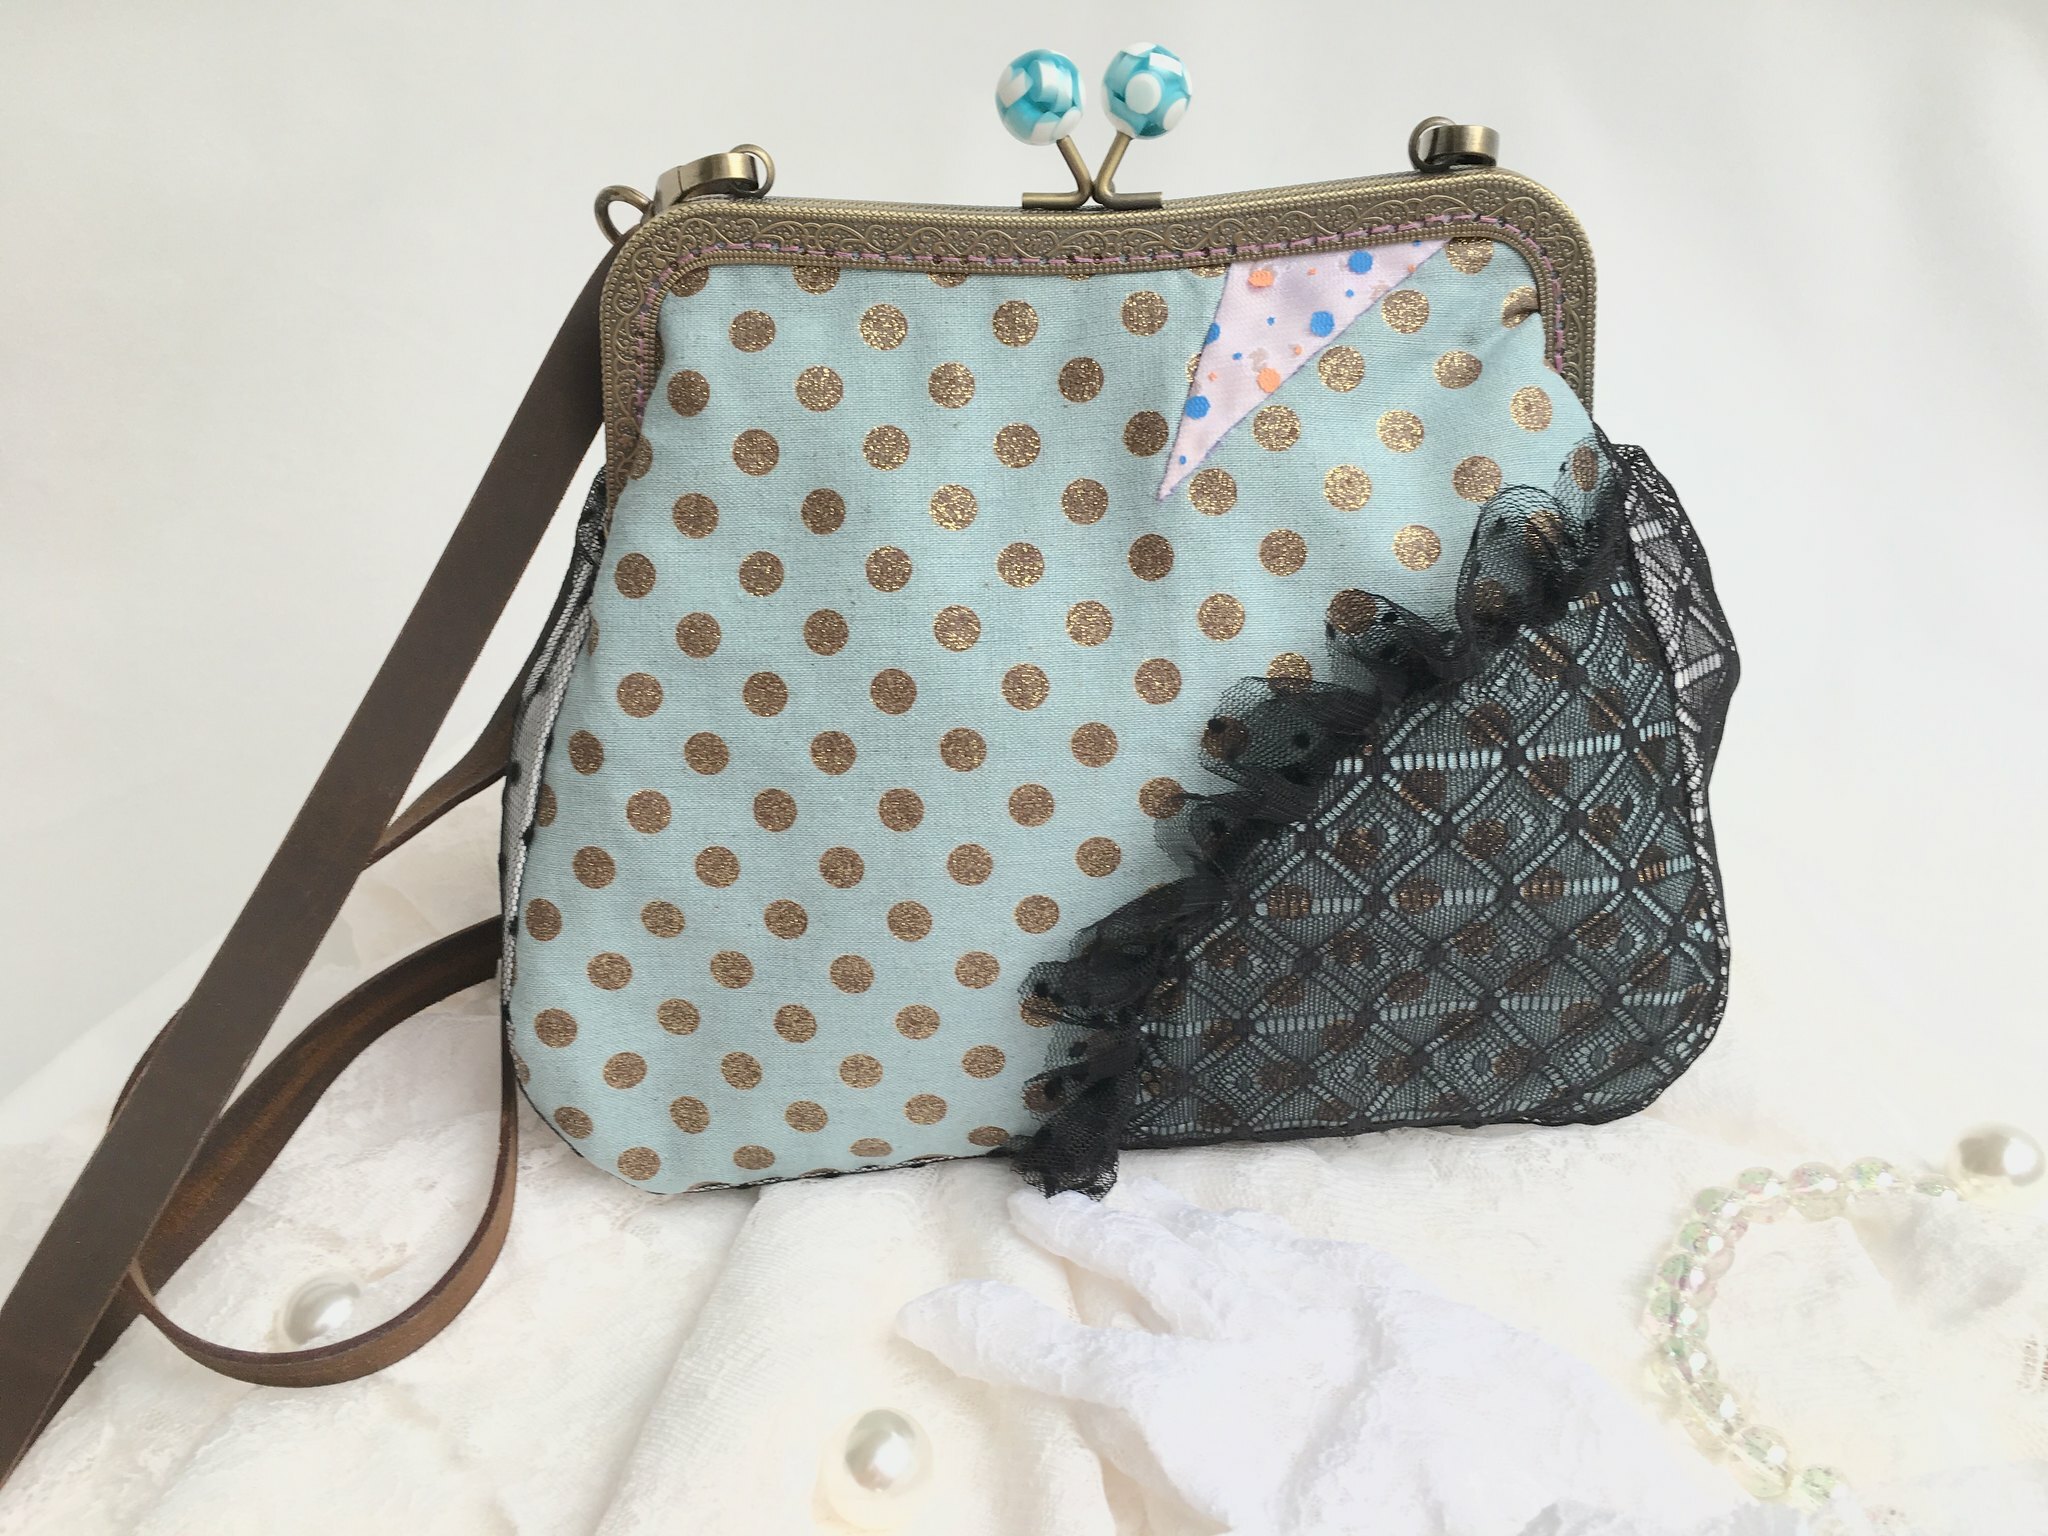 口金包金蔥點點吻鎖包gamaguchi polka dot clasp bag kisslock frame bag for lady gift 風后妃設計